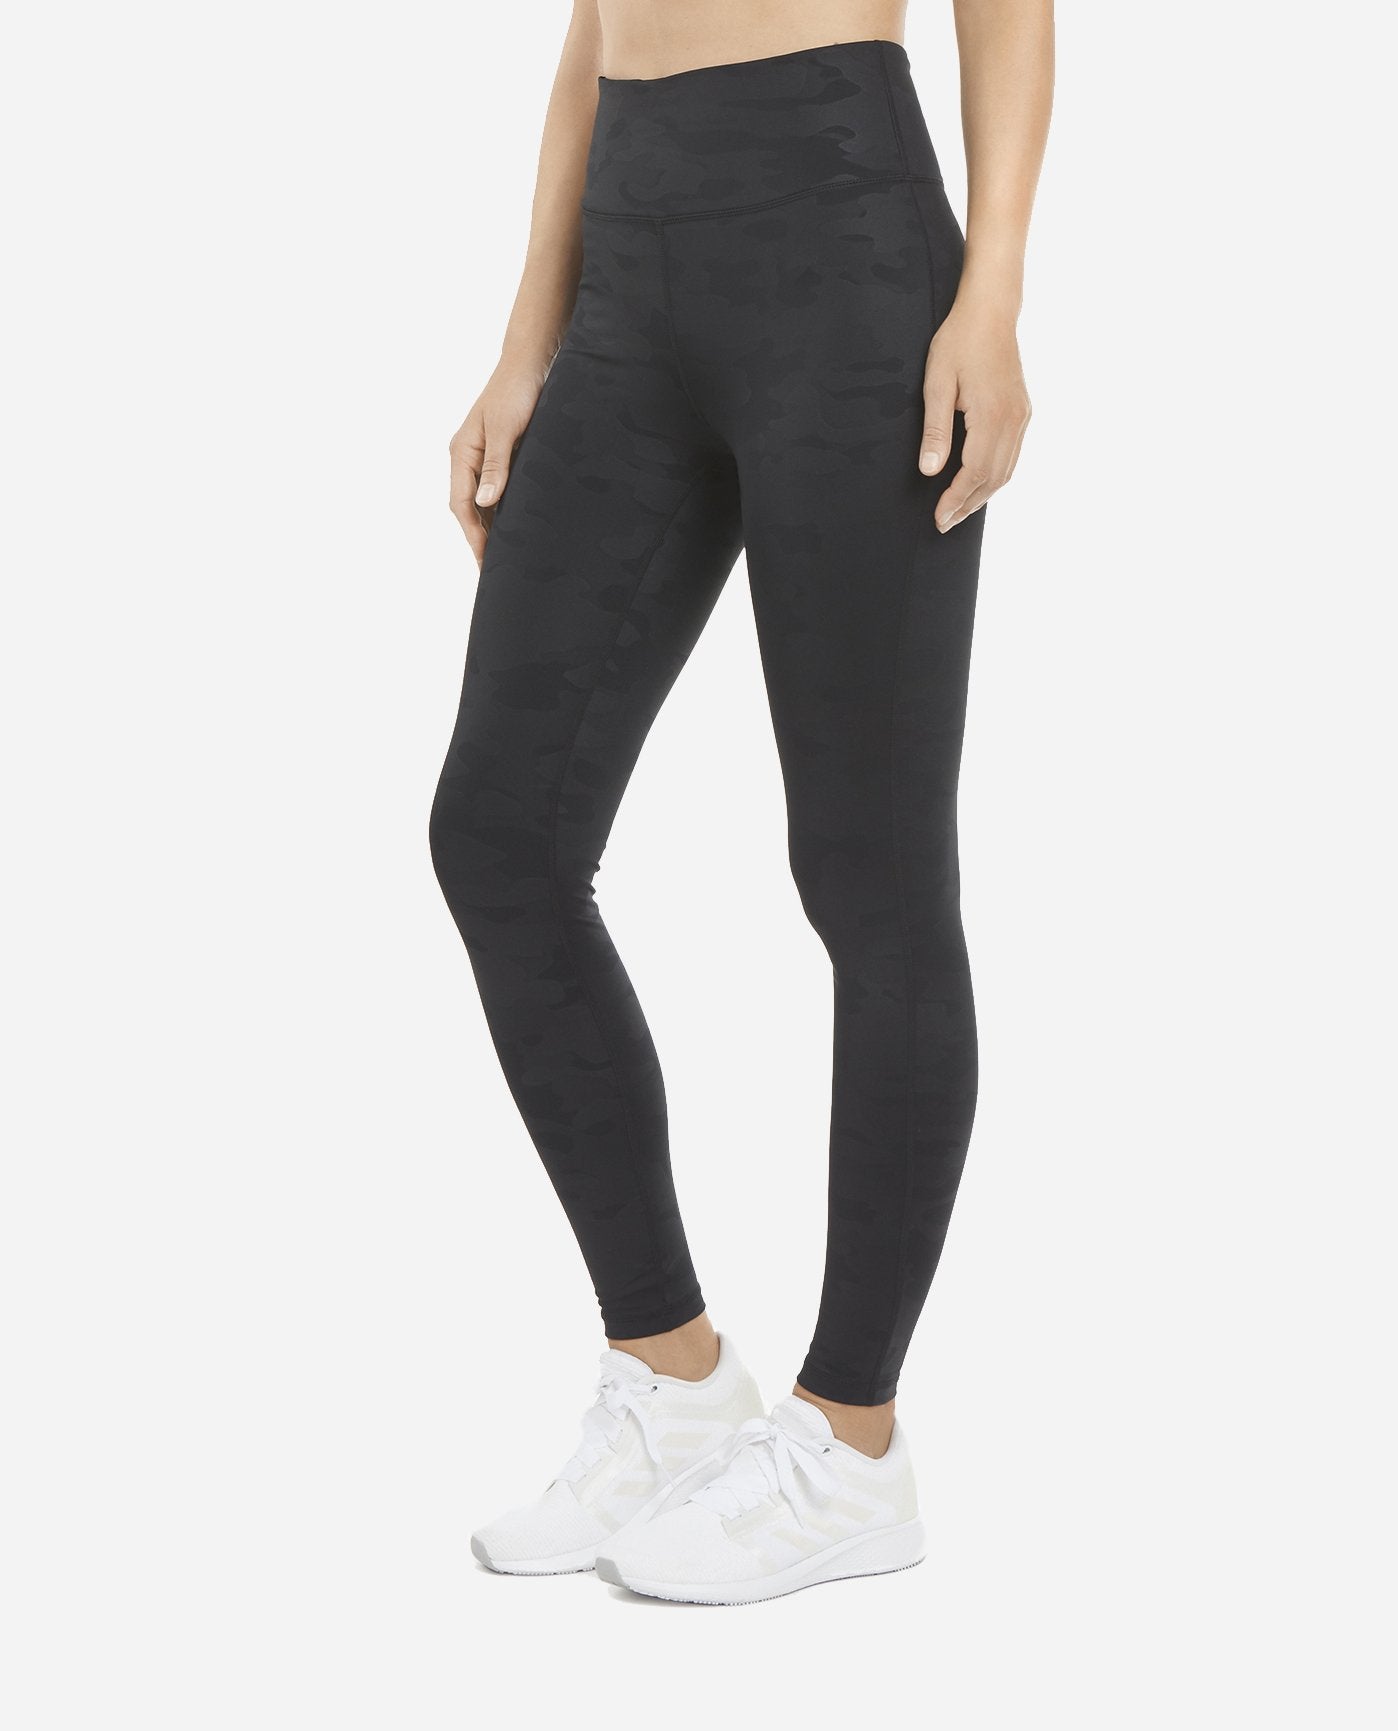 Spanx Black Camo Print High Rise Leggings Size XL - $58 - From